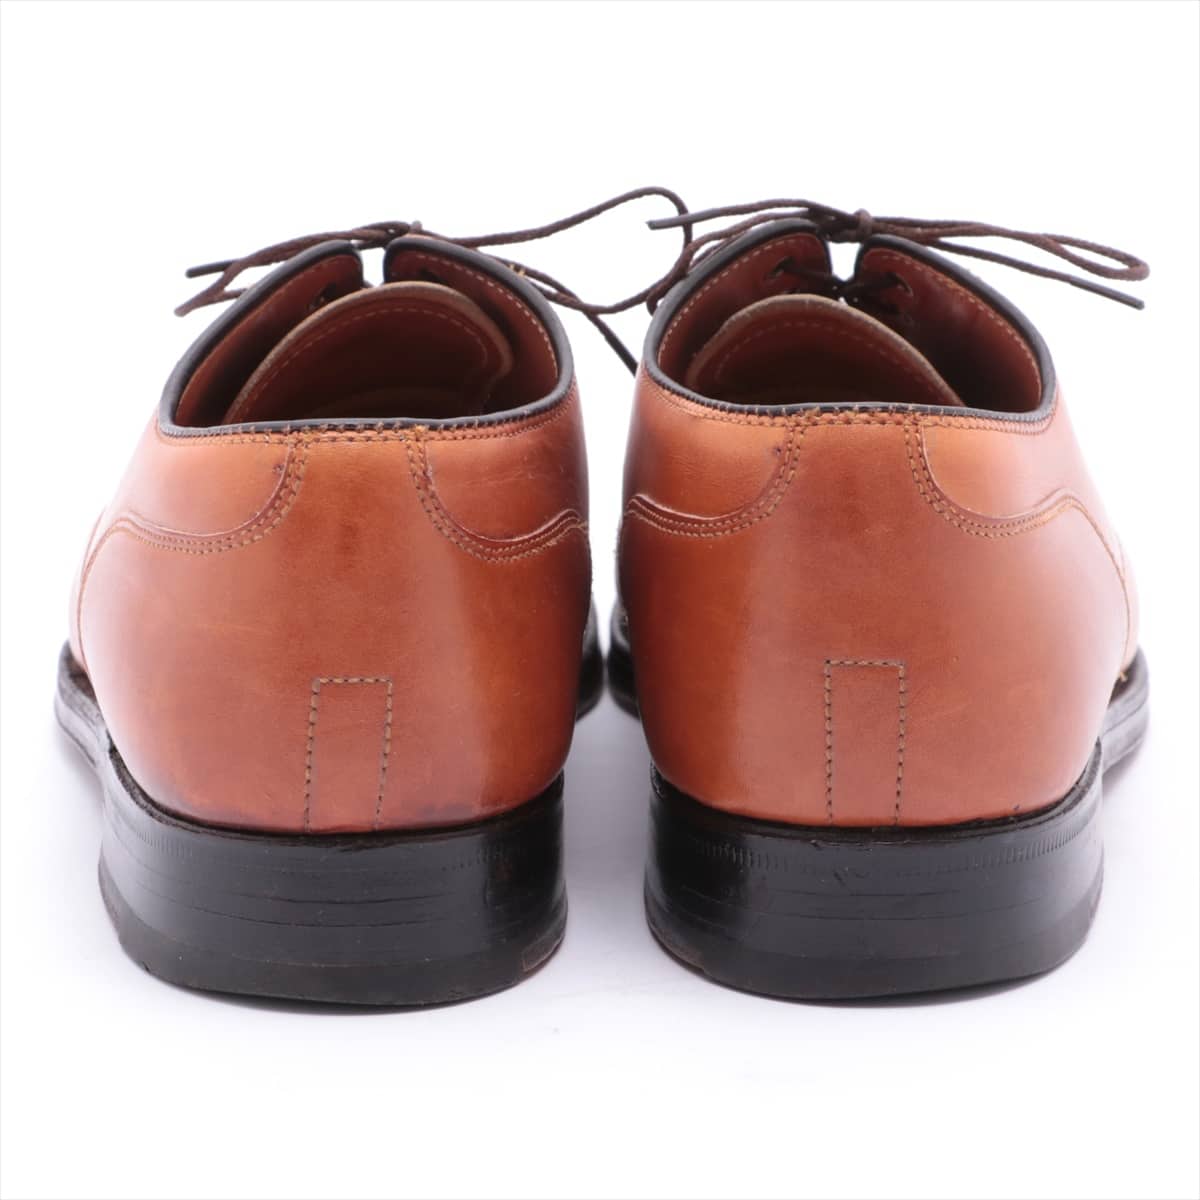 Alden Leather Leather shoes 8 Men's Camel Cordovan